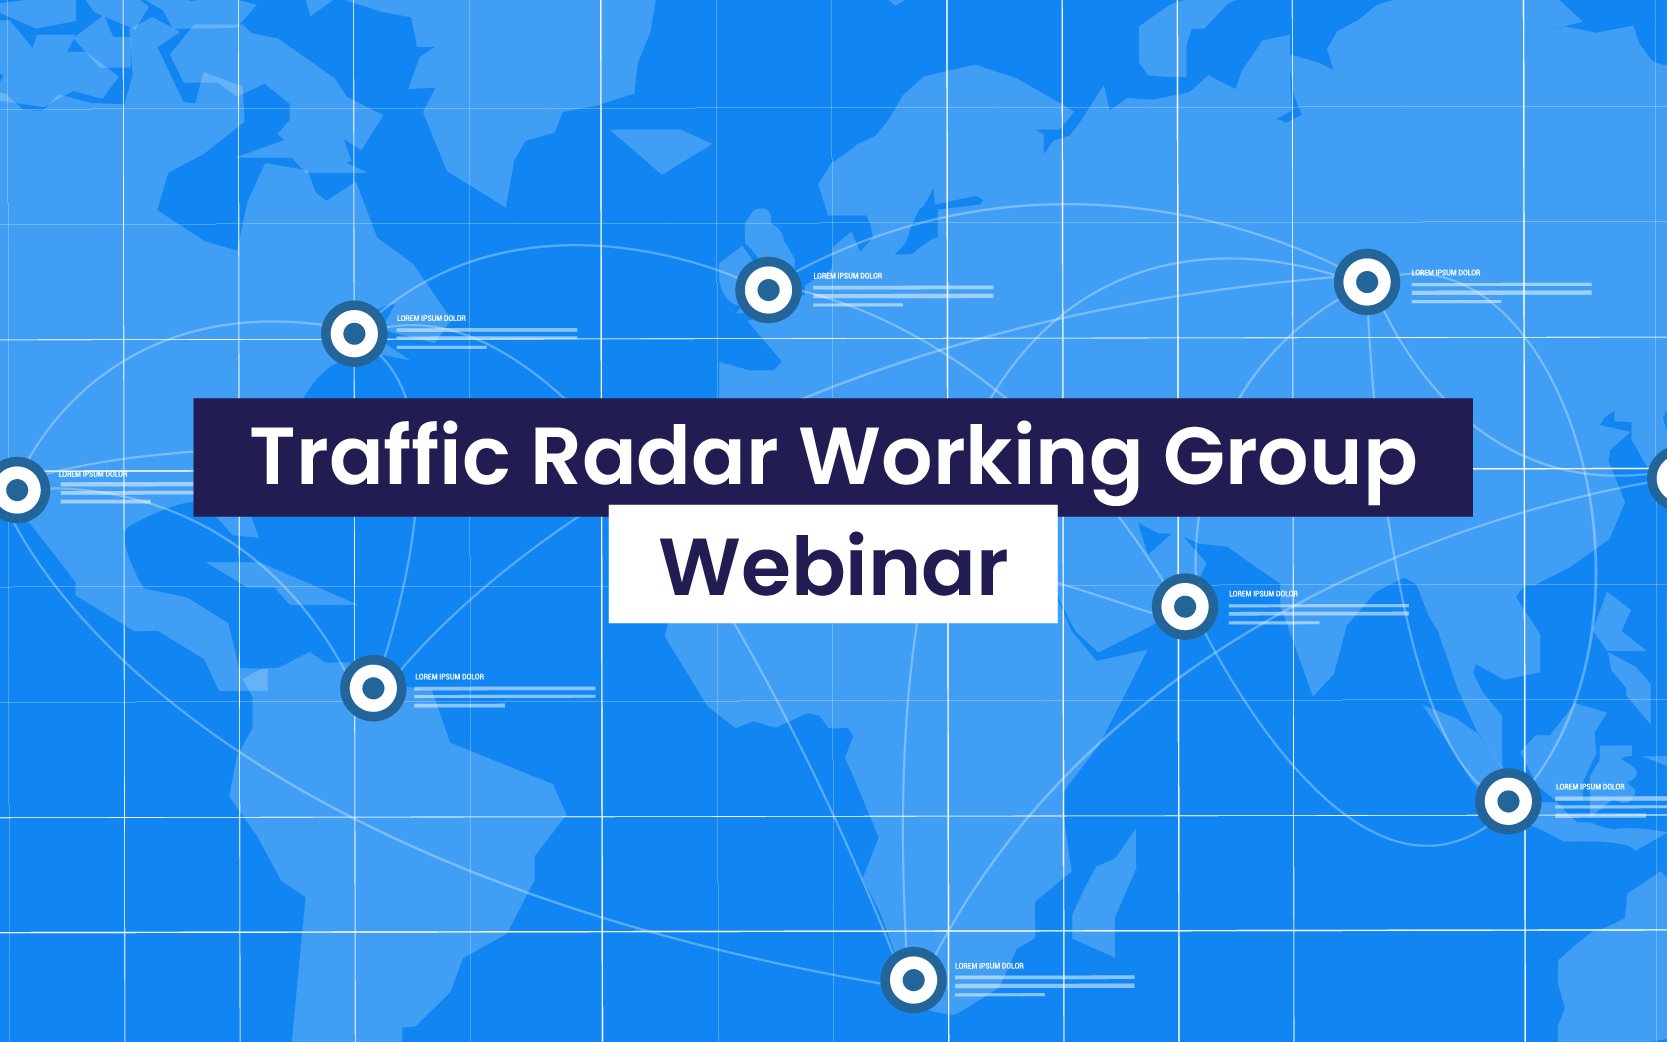 Webinar about the Traffic Radar Working Group